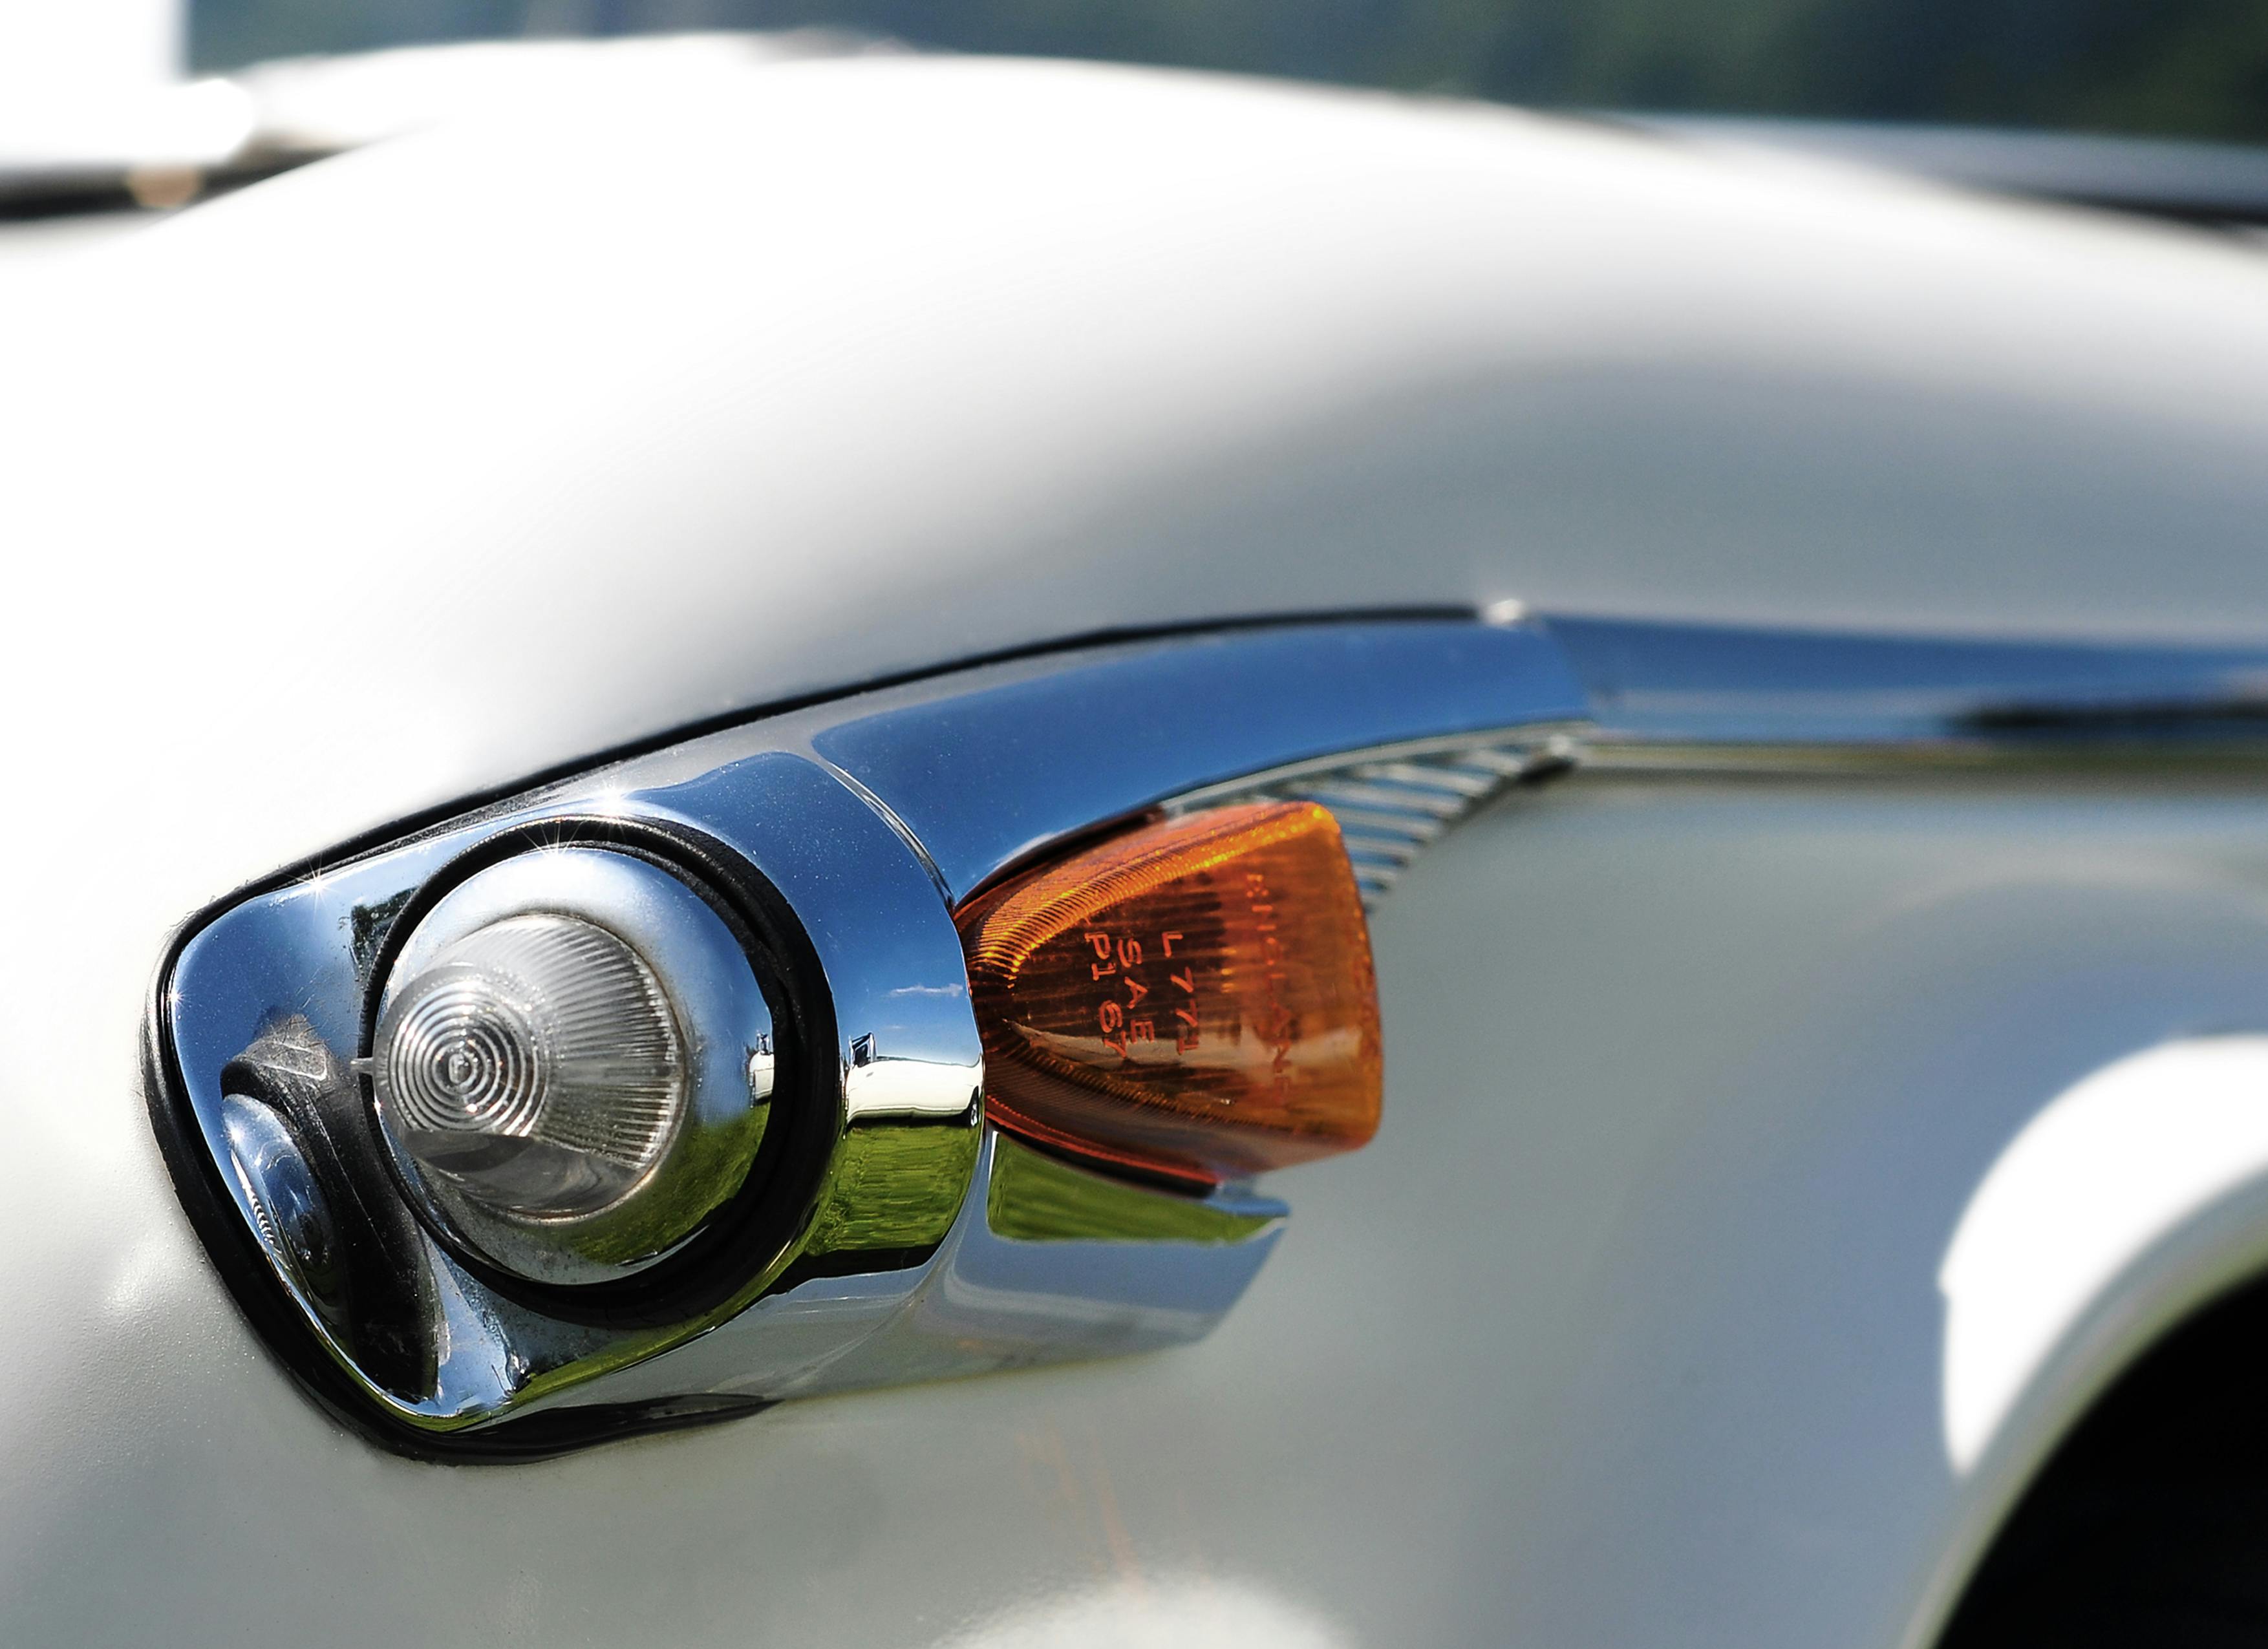 Free stock photo of classic car, detail, indicator light